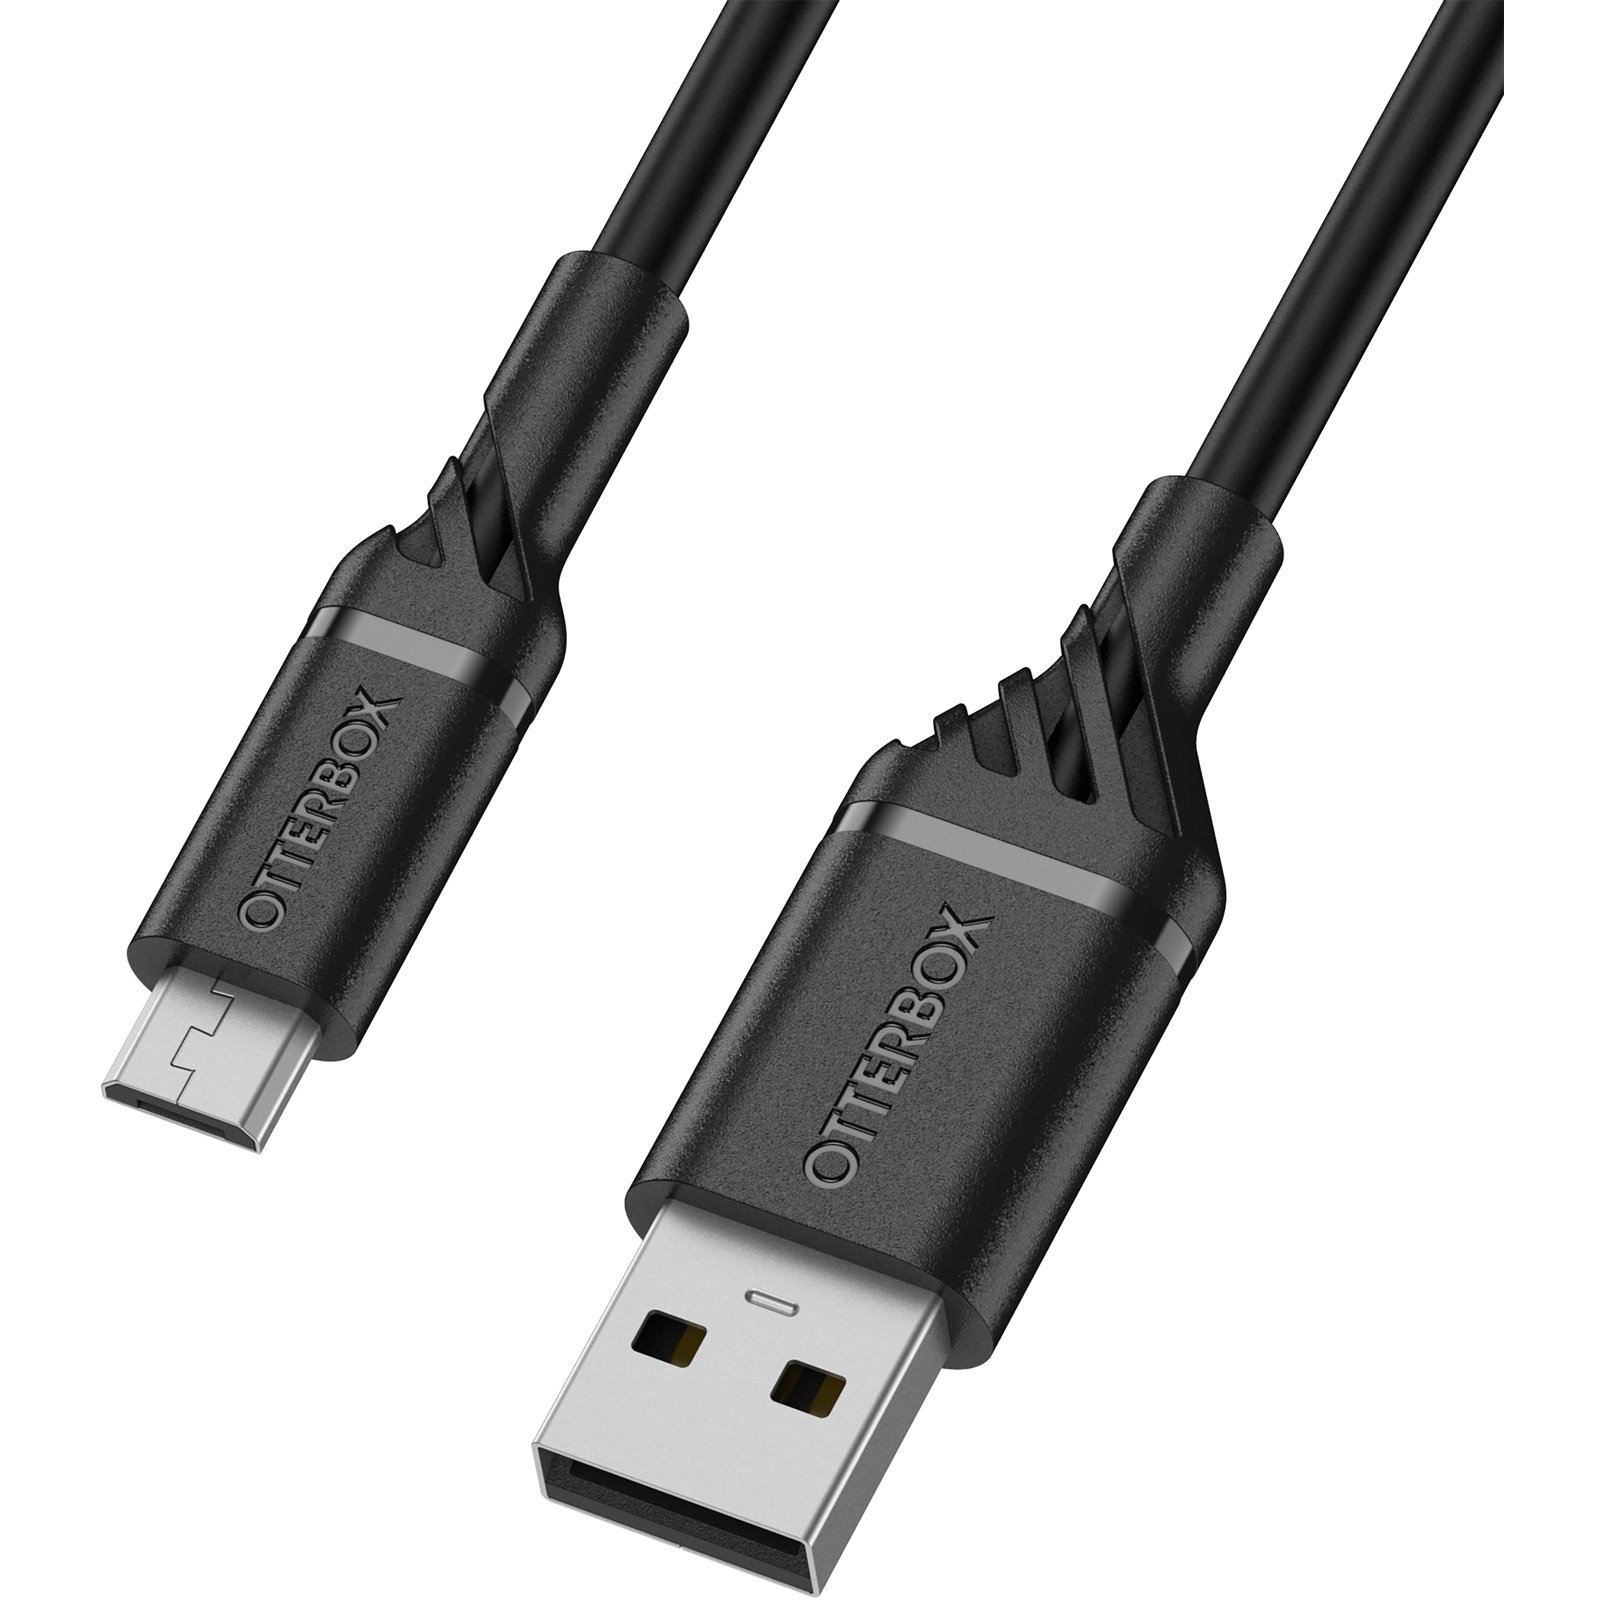 Micro USB to Micro USB OTG Cable - 10-12 / 25-30cm long : ID 3610